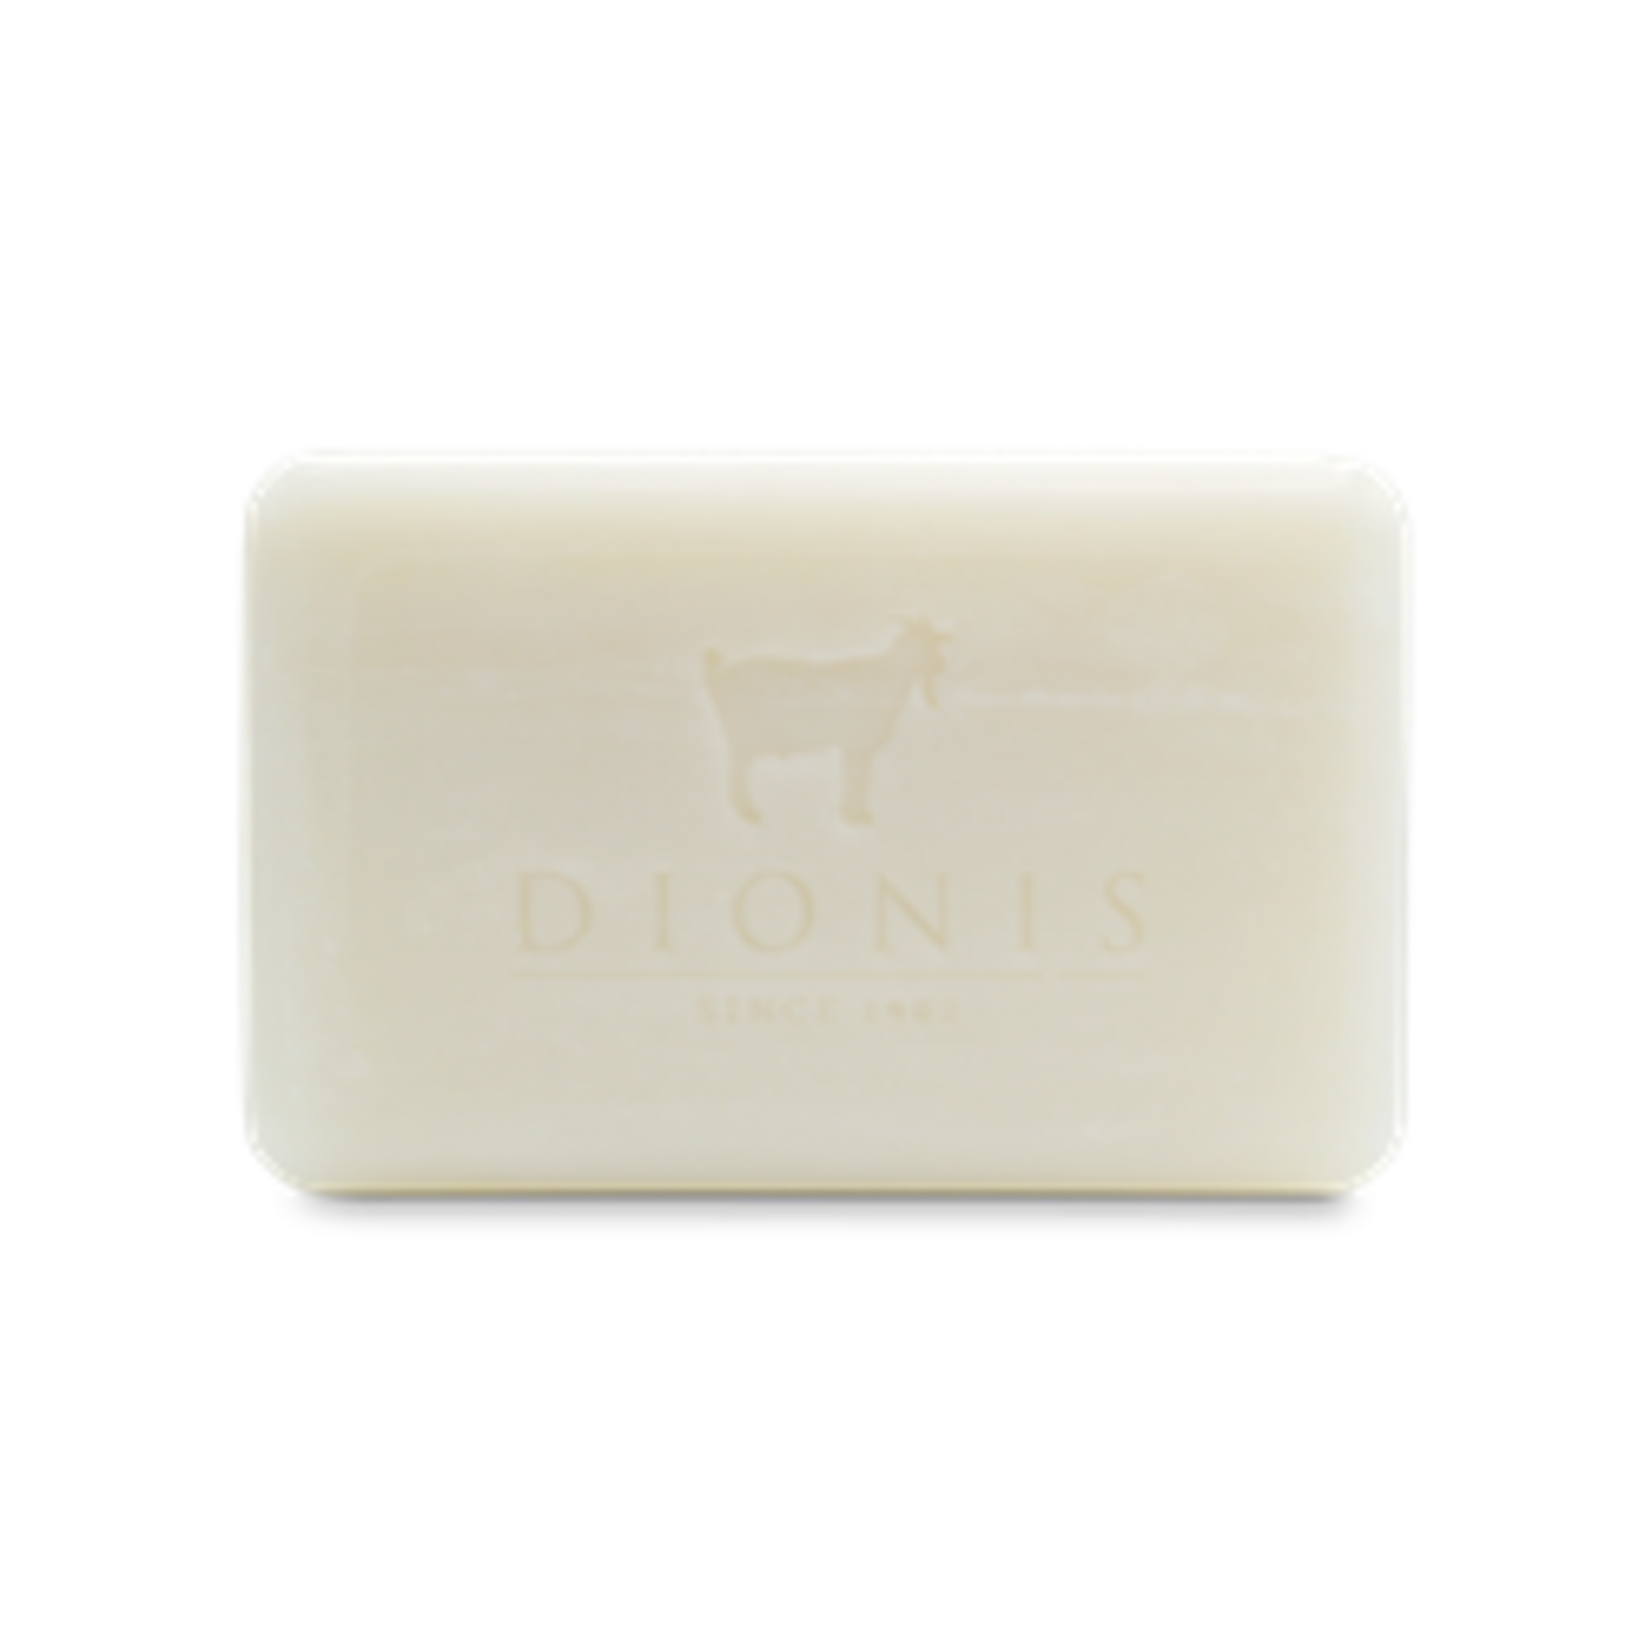 Dionis Dionis’ Goat Milk Bar Soap